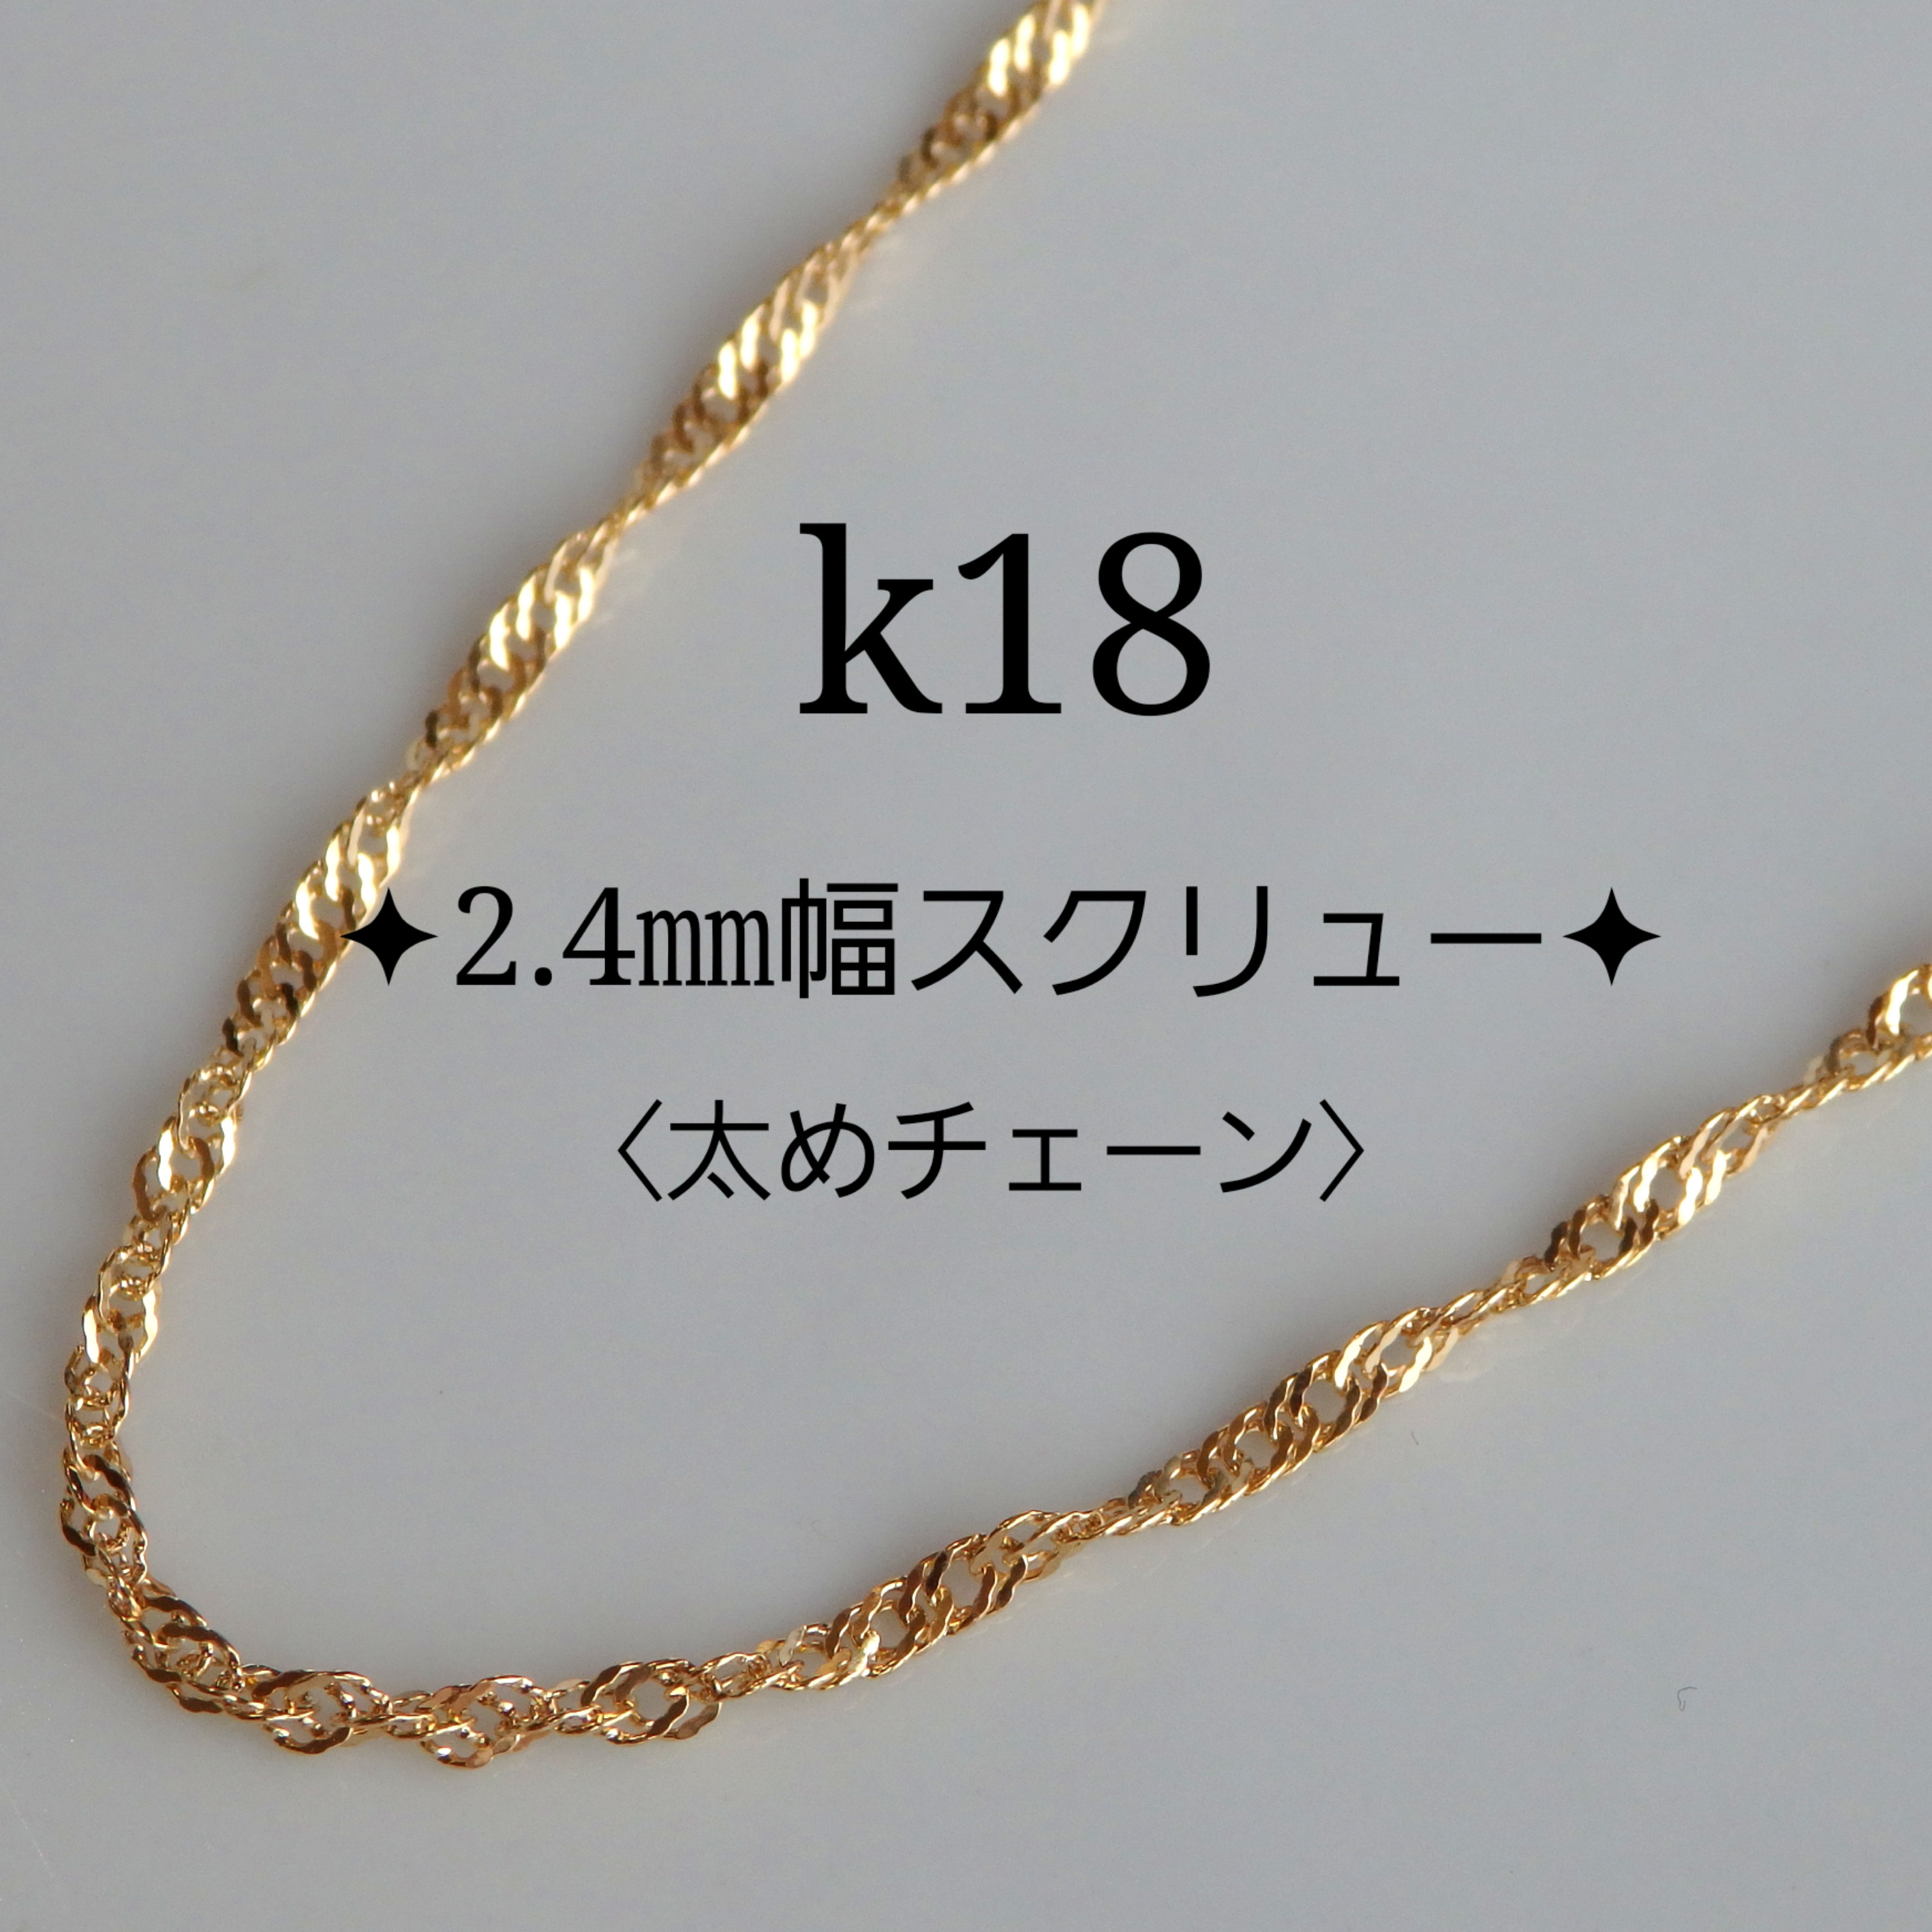 k18ネックレス スクリューチェーンネックレス 2.4㎜幅 太めチェーン 18